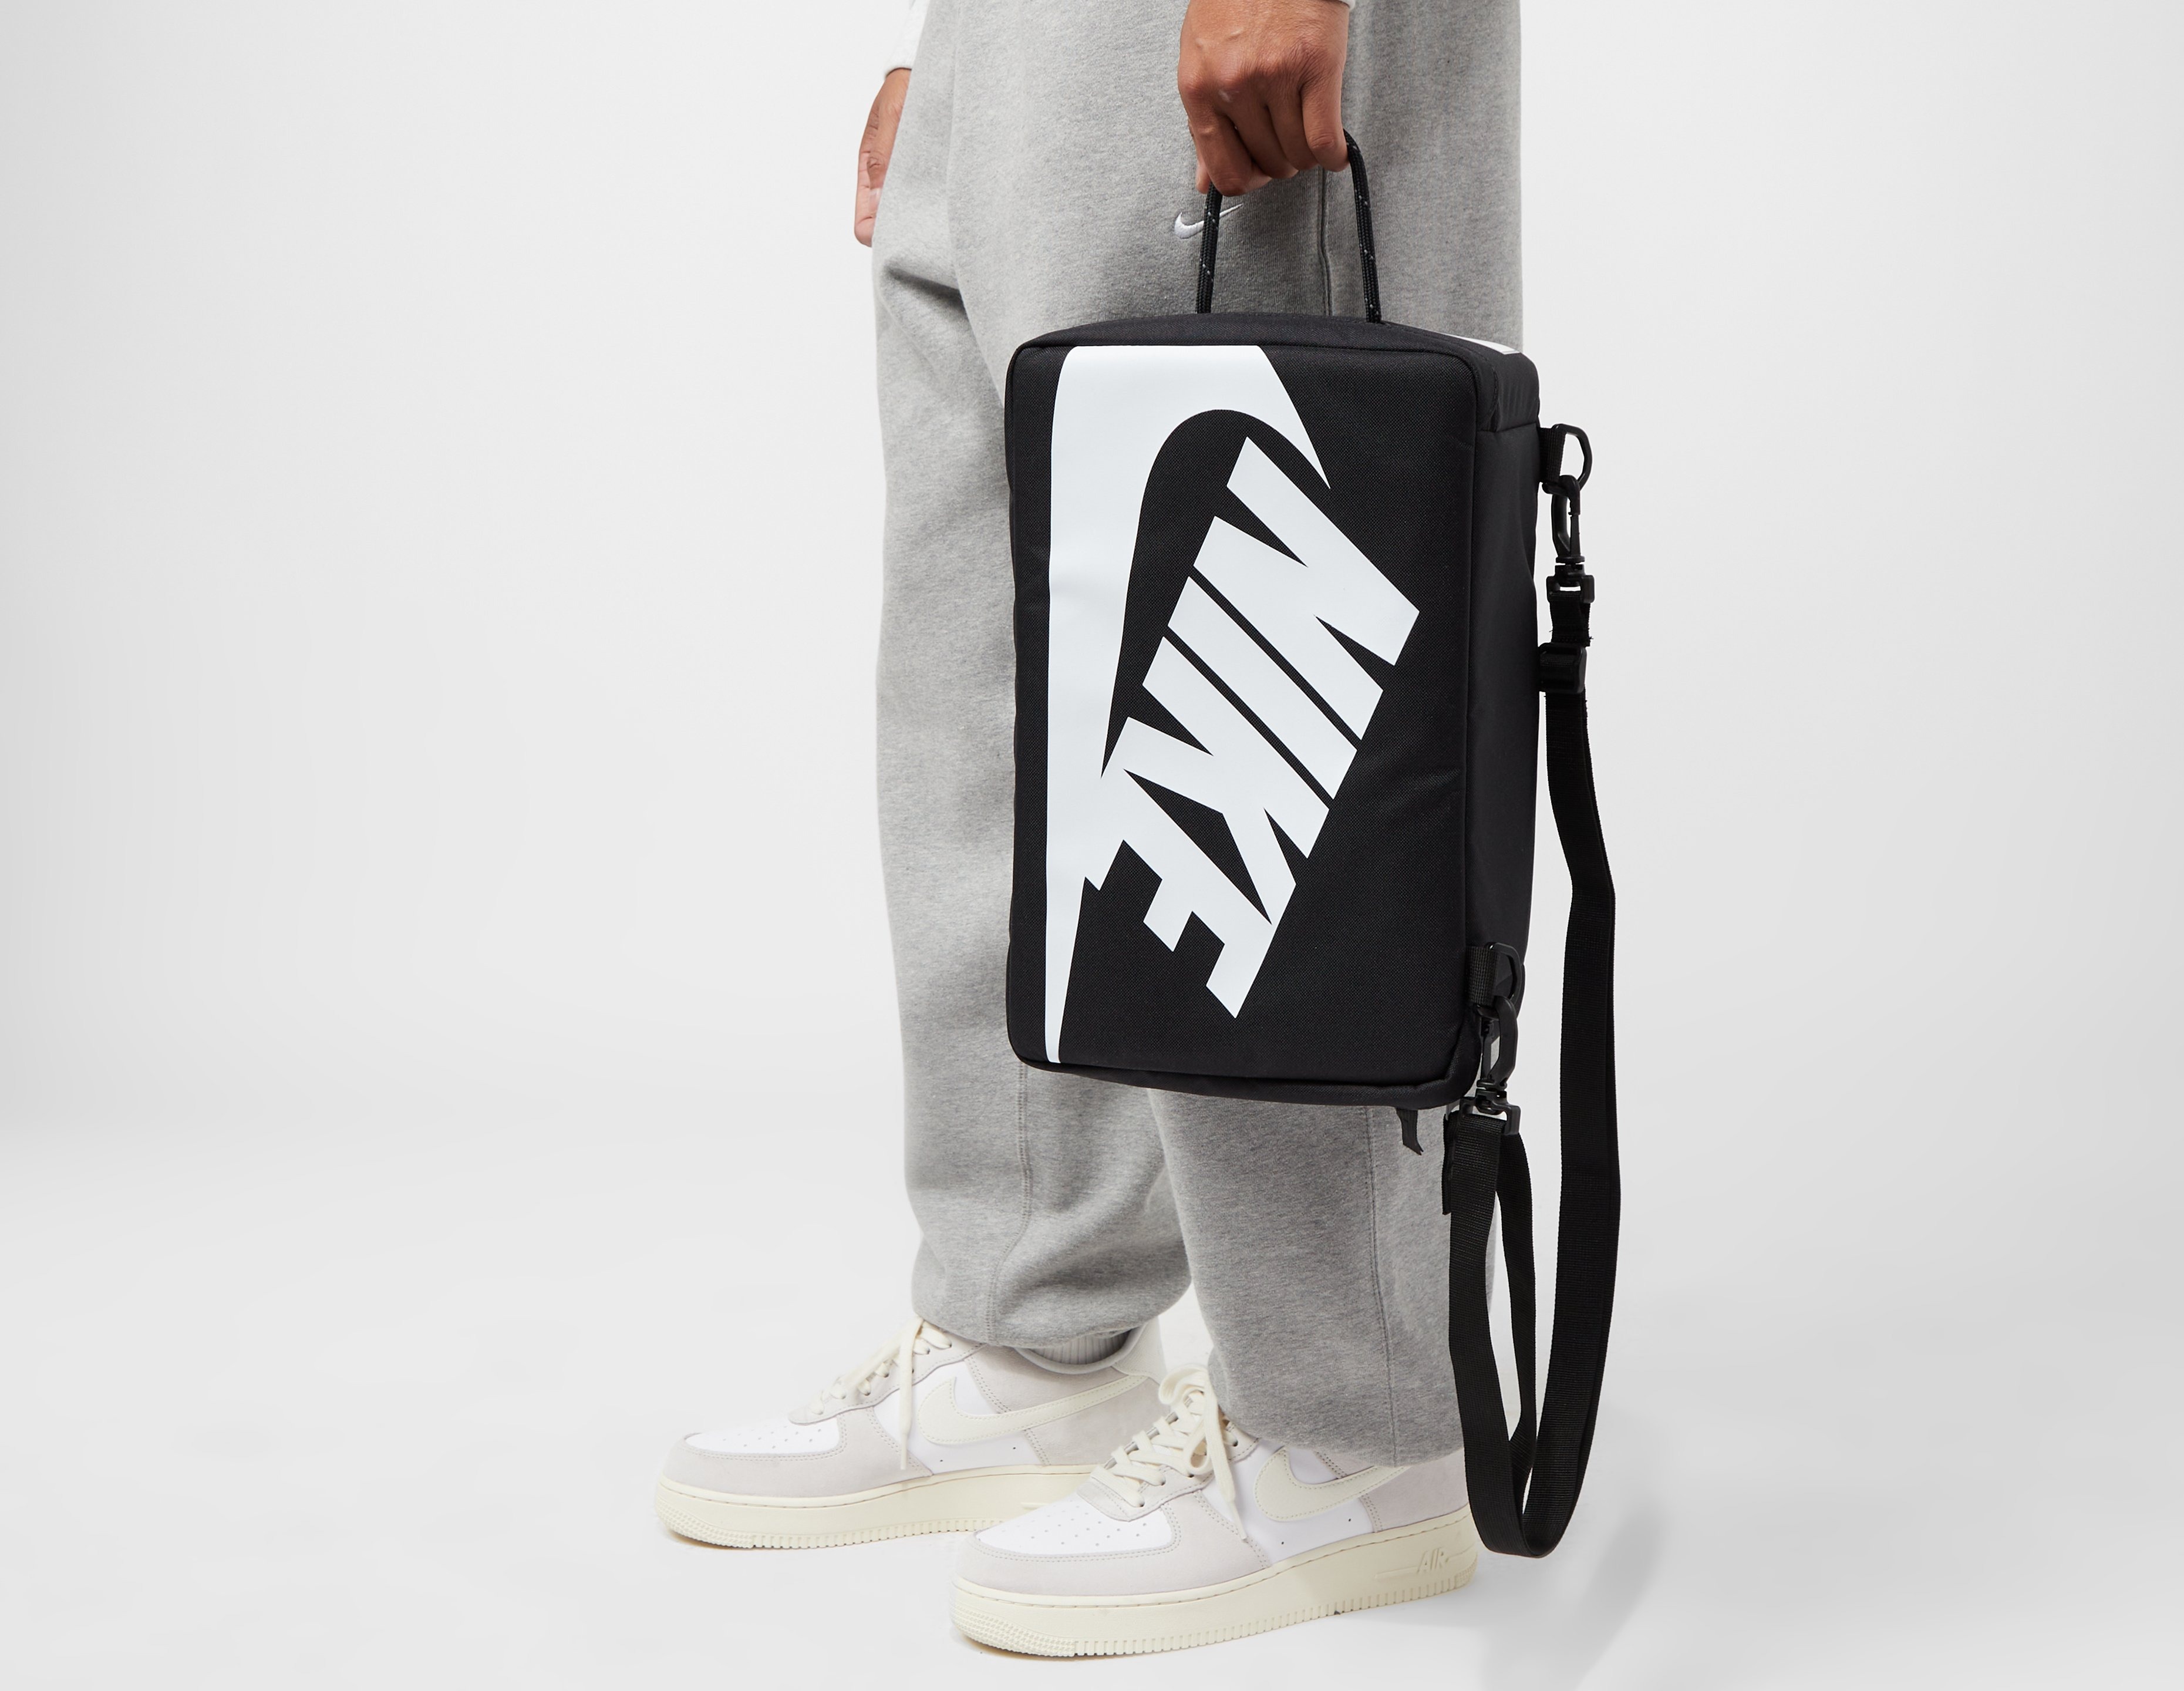 Shop Nike Futura 365 Crossbody Bag online